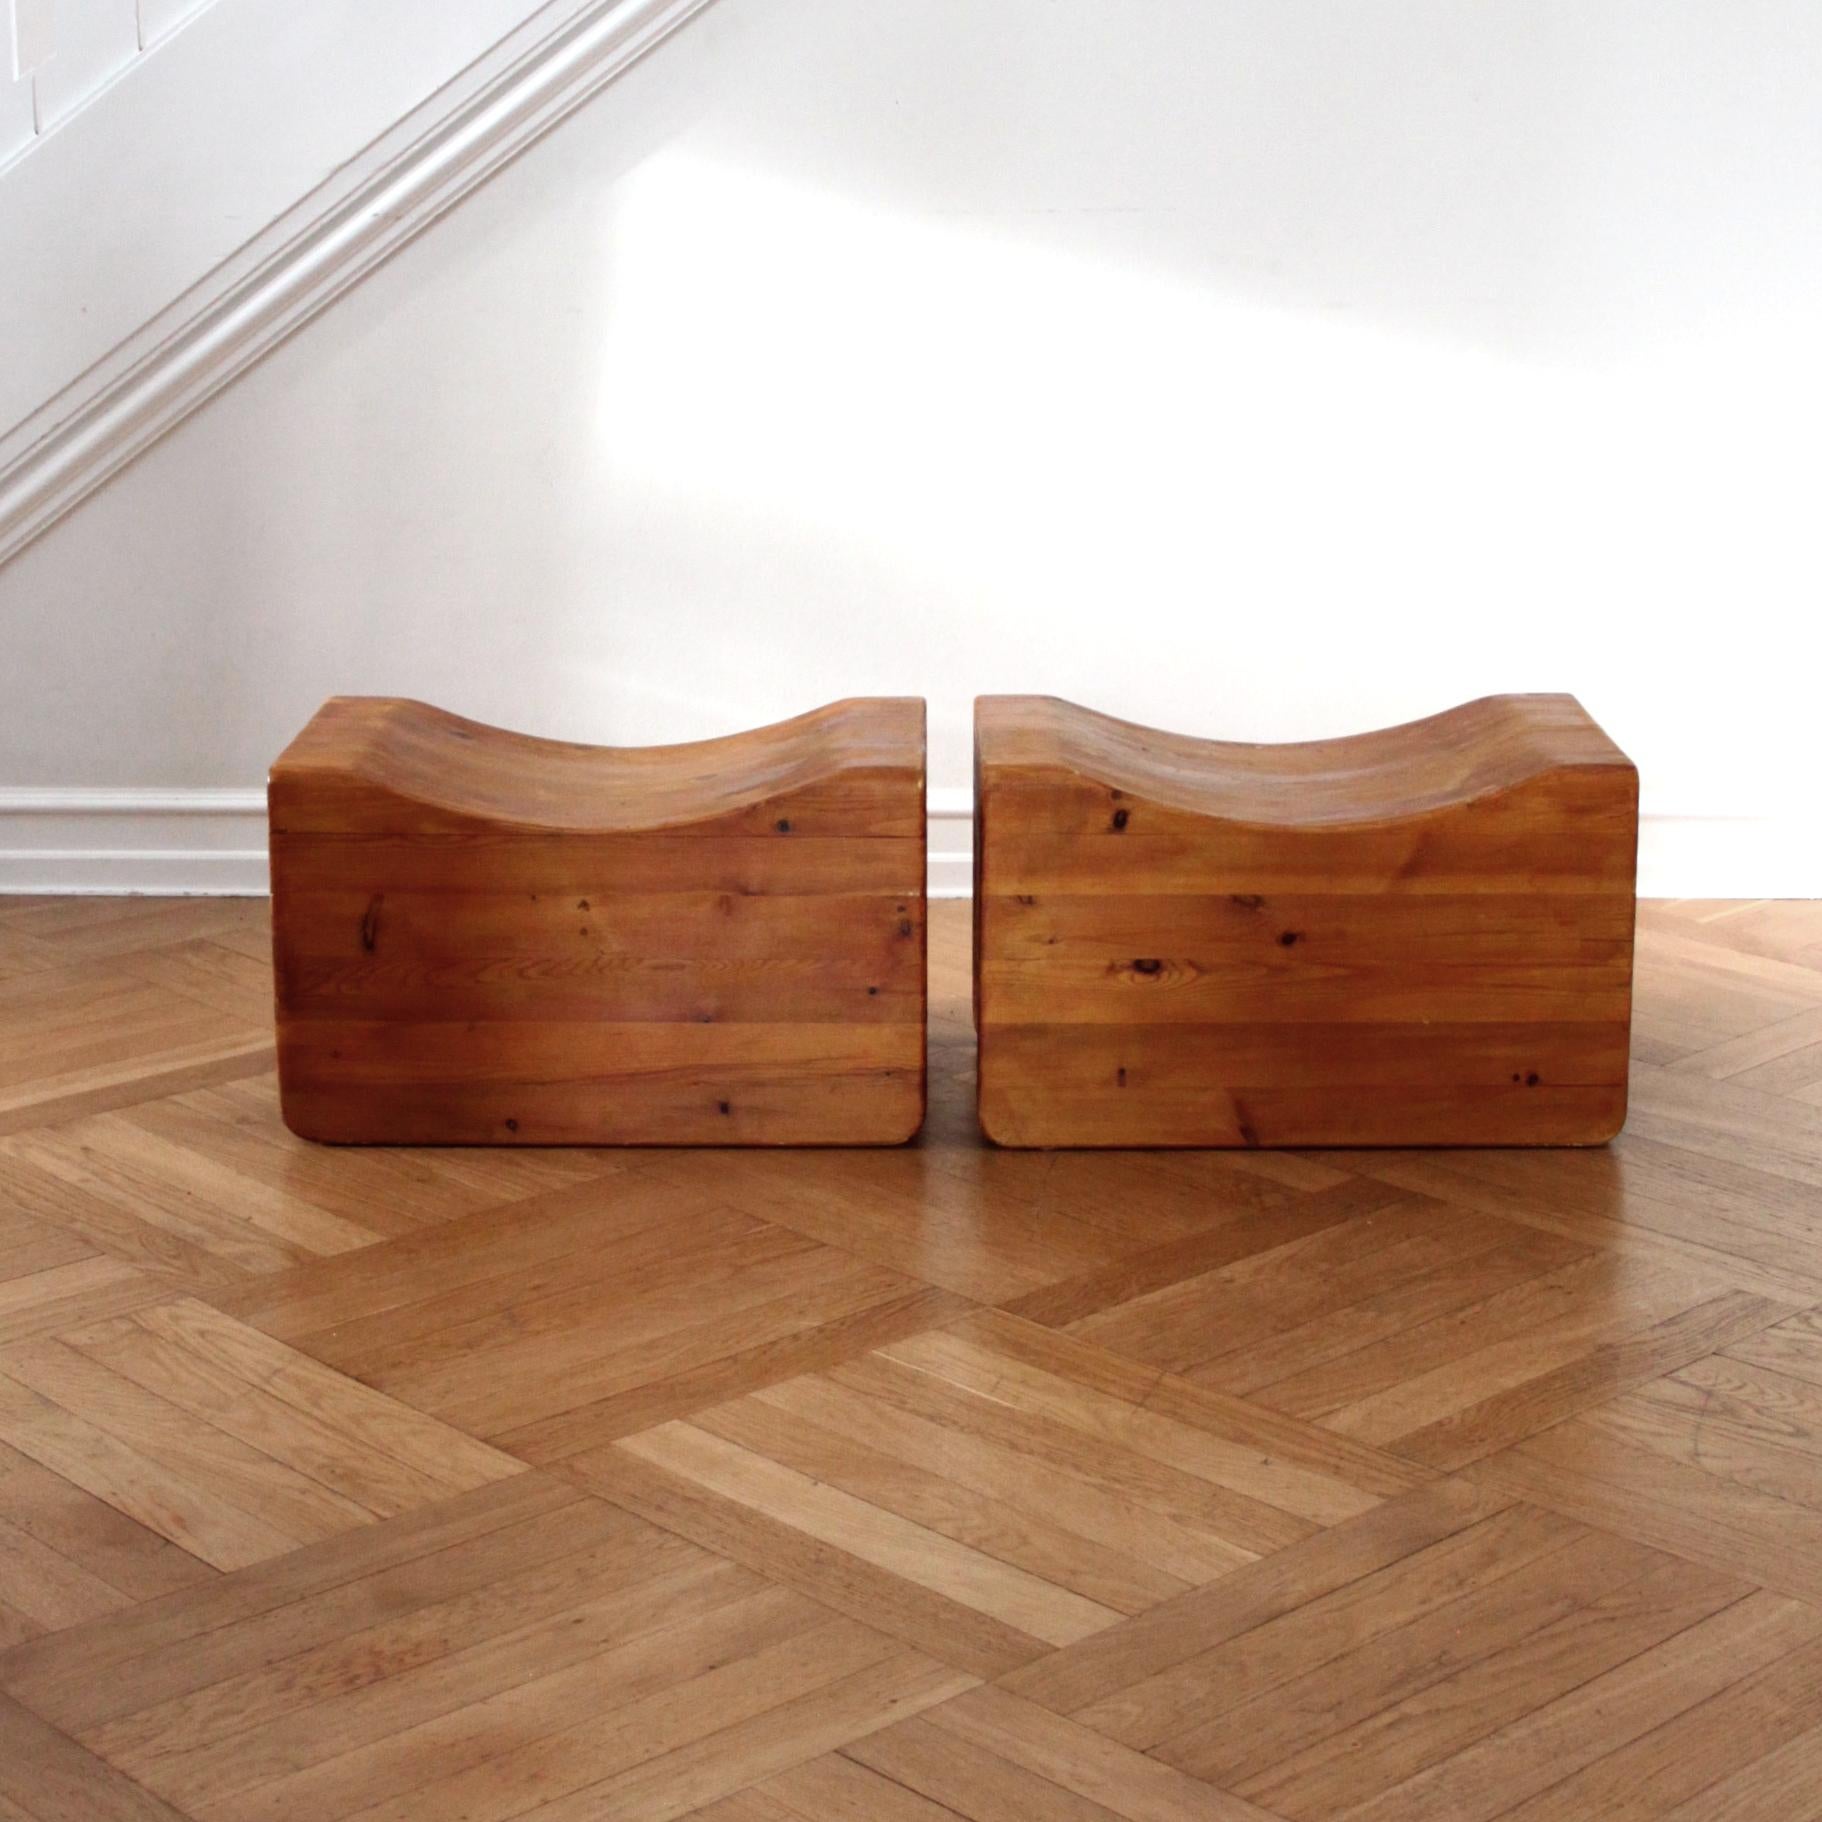 Danish K.J. Petterson & Söner, Pair of Stools in Pine, Scandinavian Modern Design